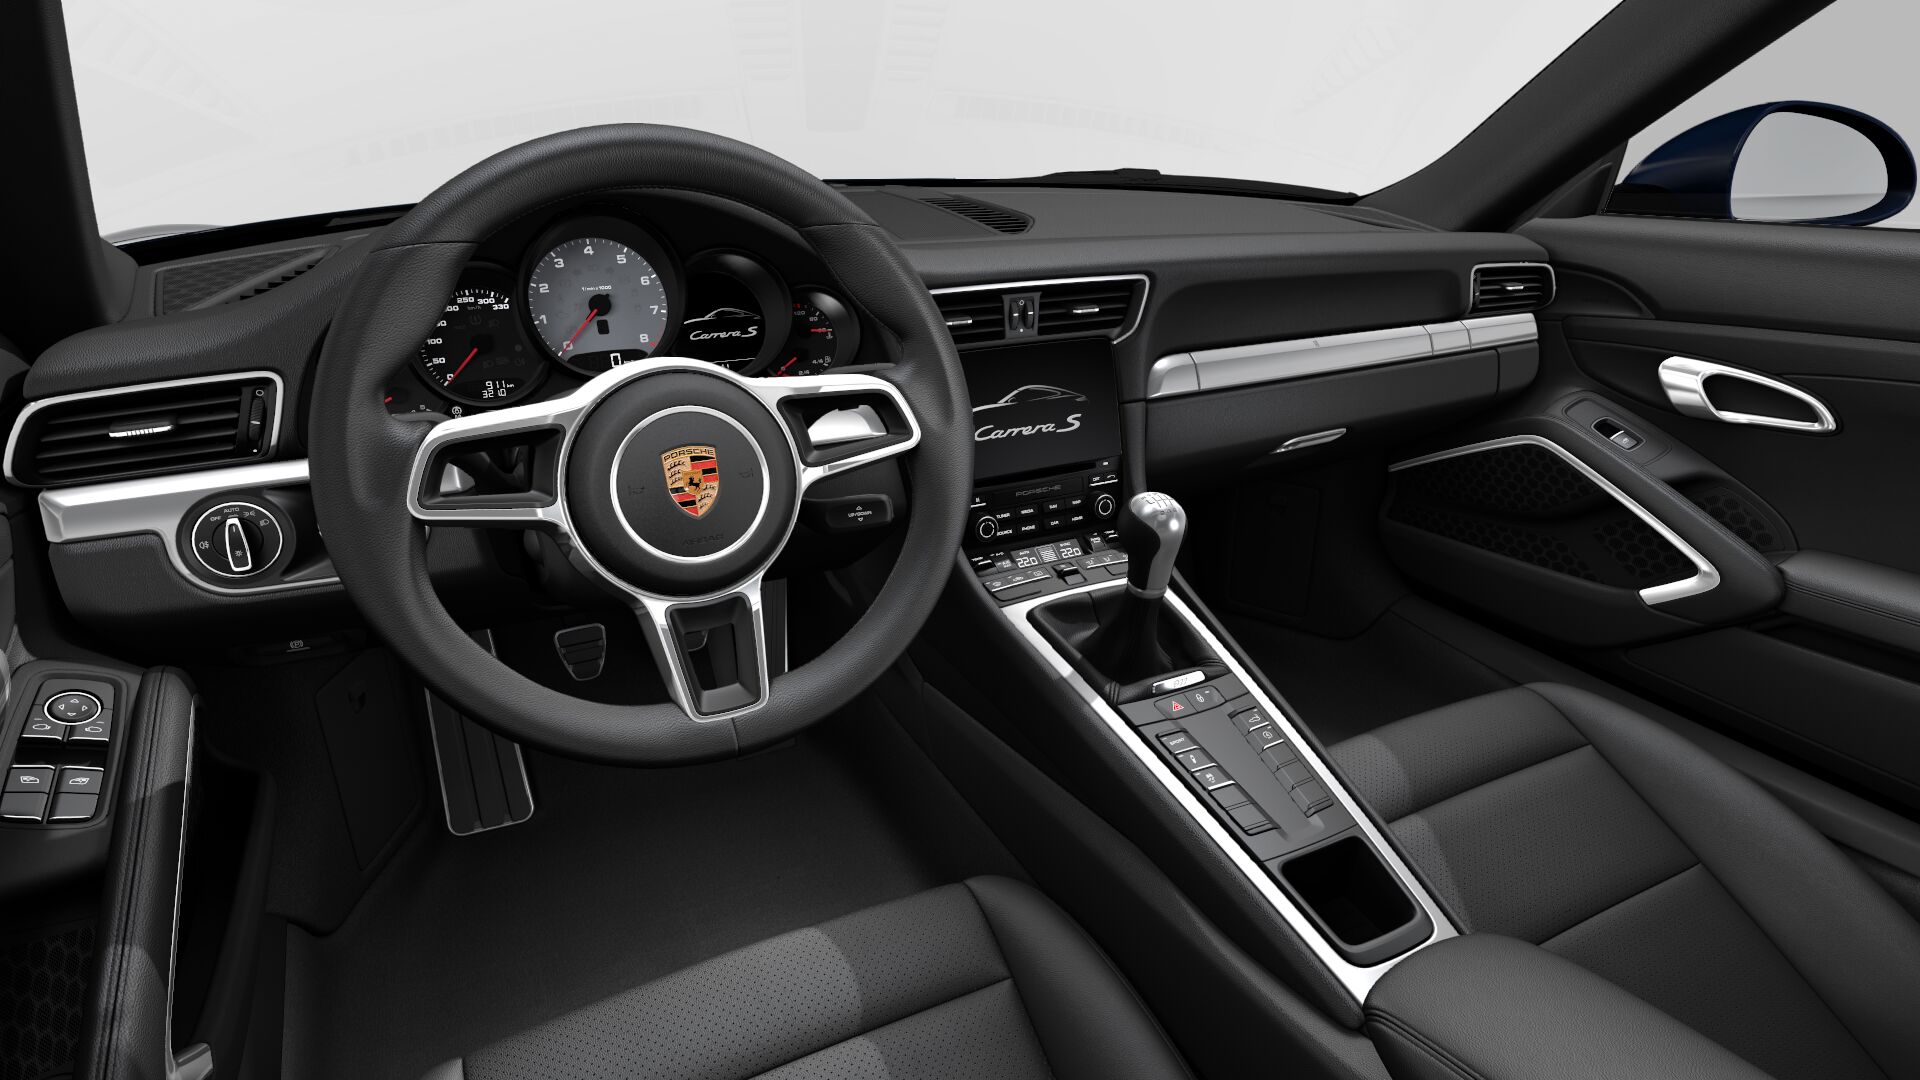 Porsche 911 Carrera 4S interior front view